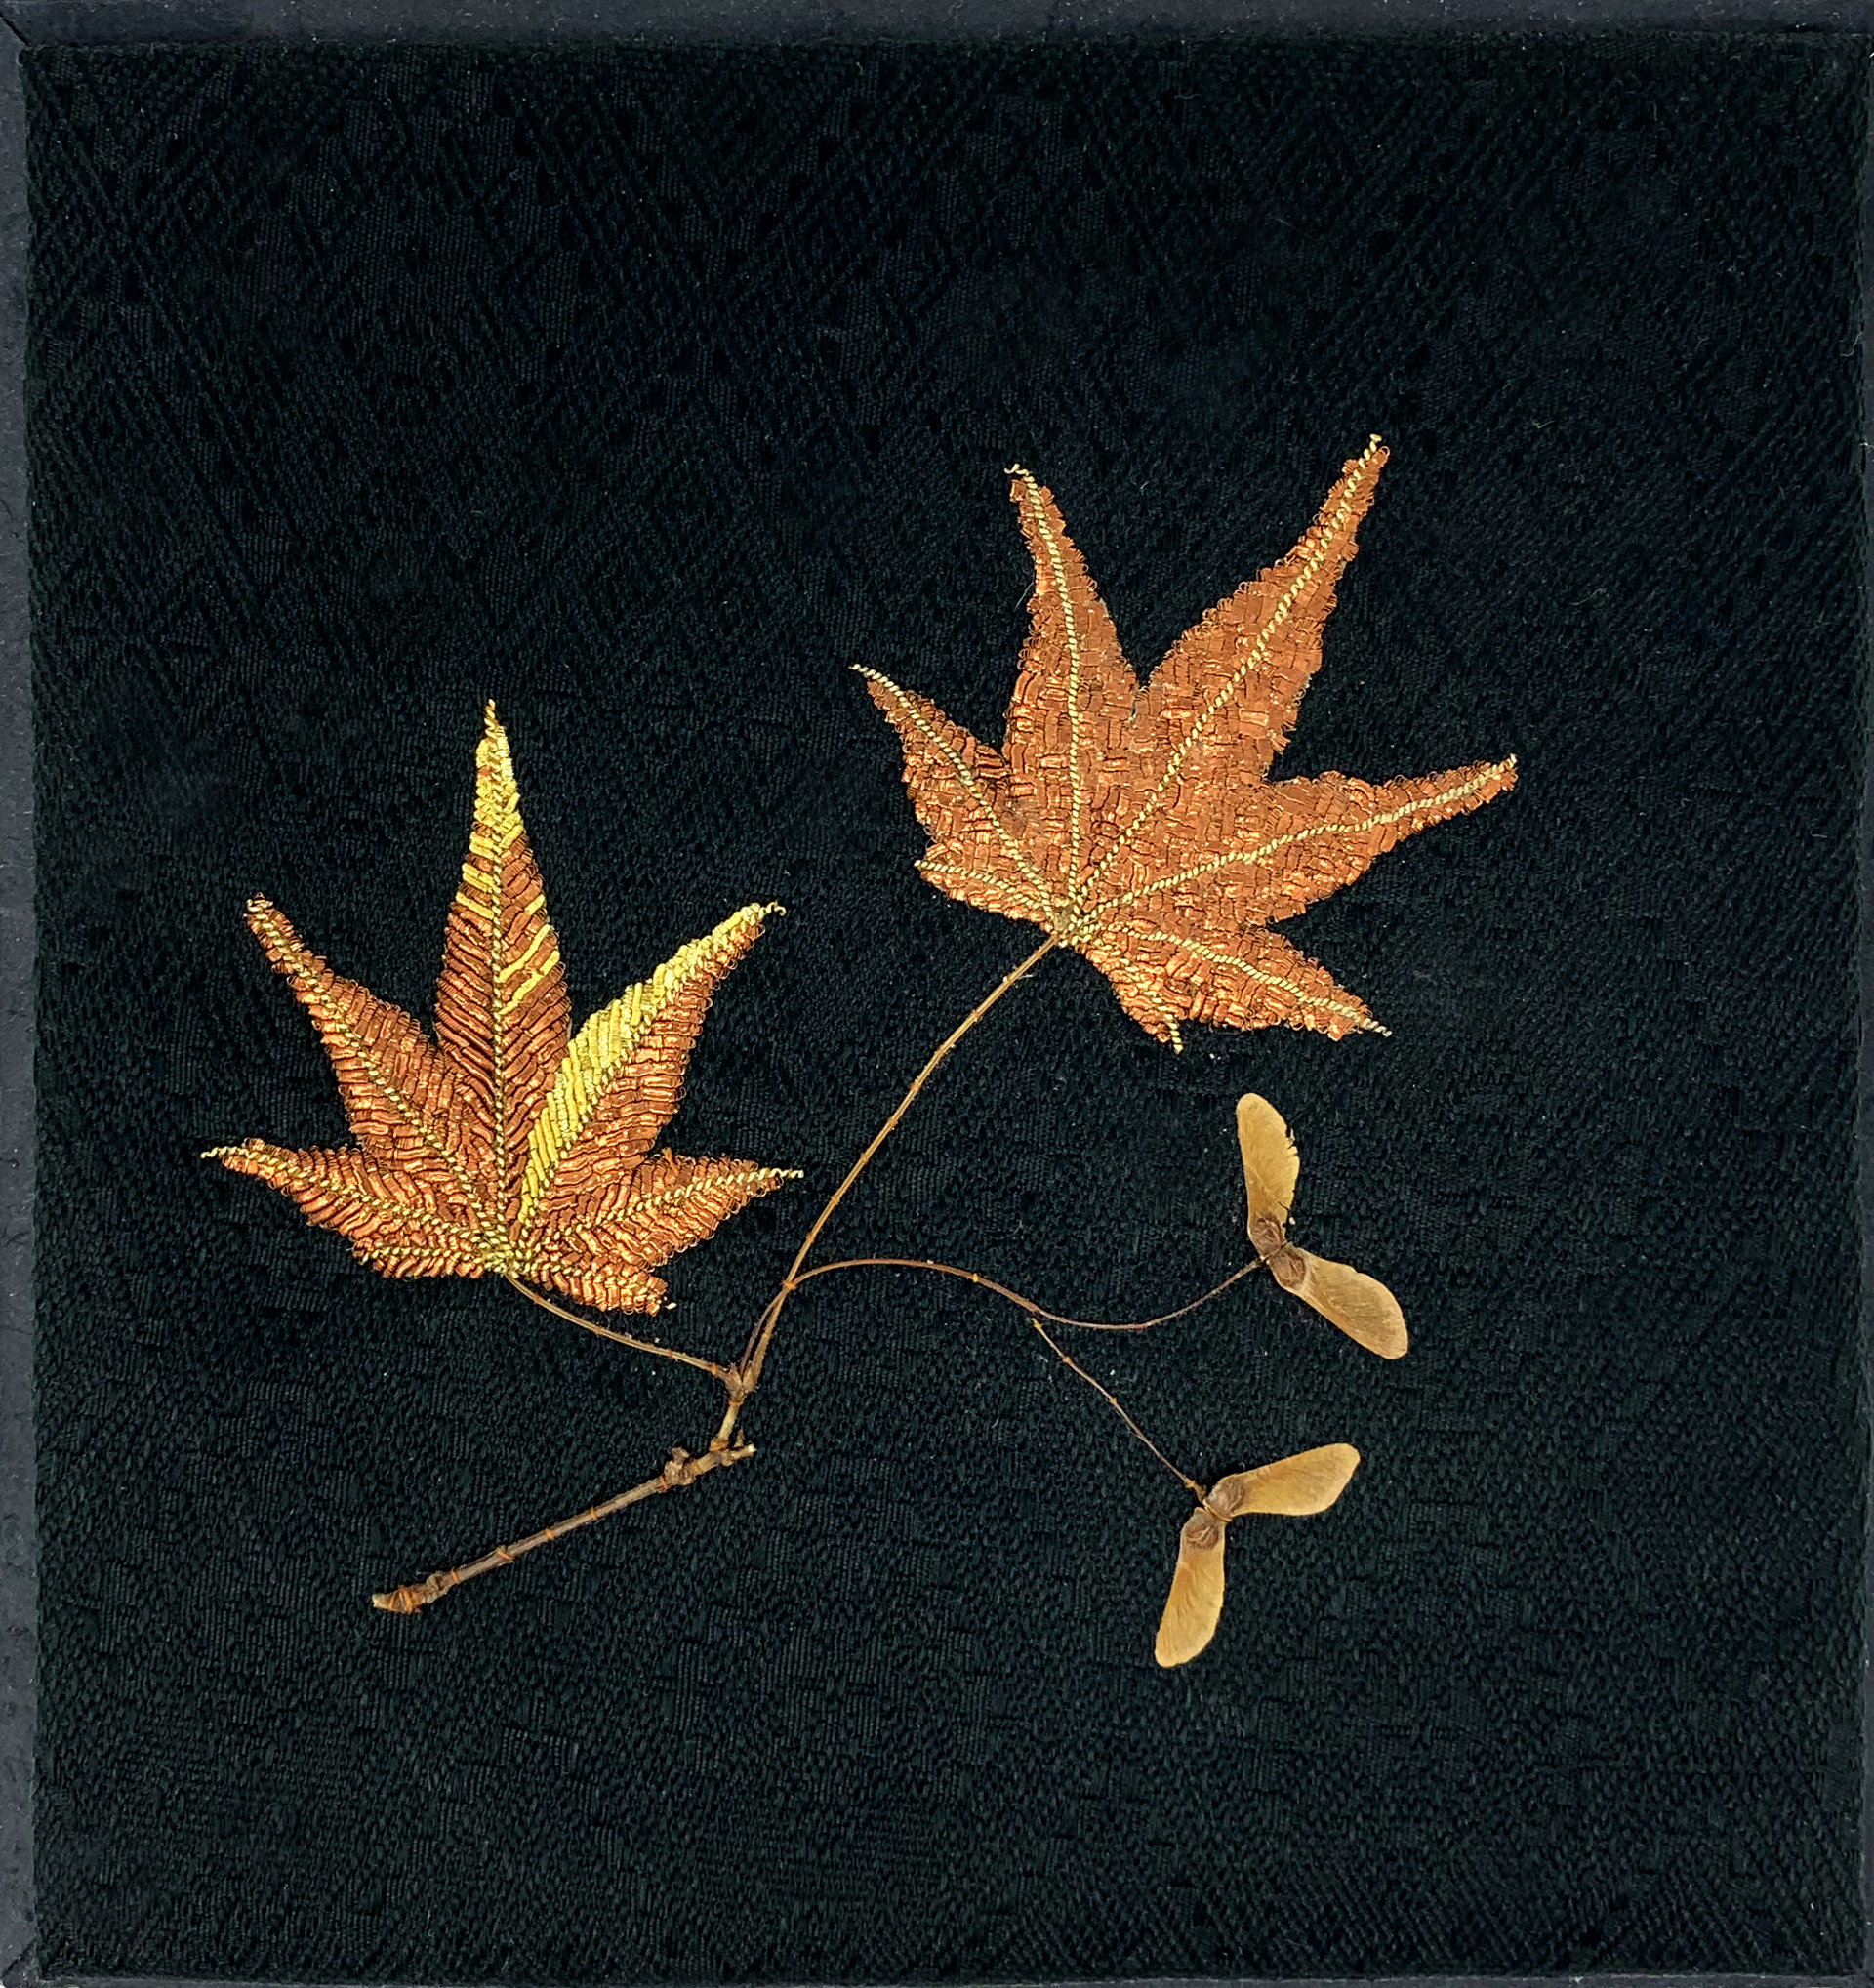 Nagoya Maple Leaves and Seedlings by Tiao Nithakhong Somsanith